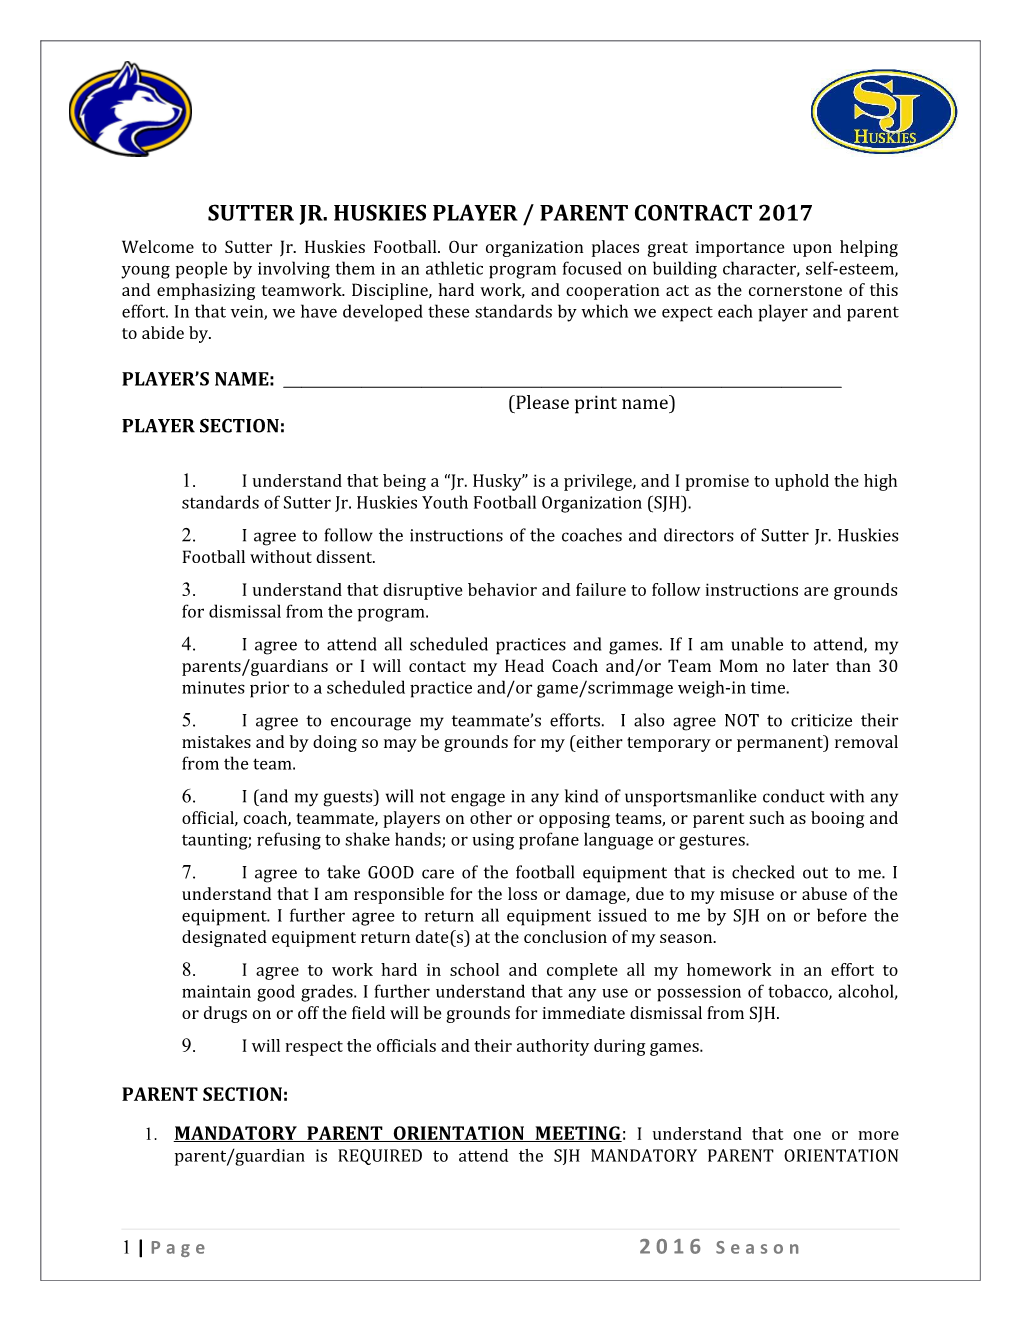 Sutter Jr. Huskies Player/Parent Contract 2017